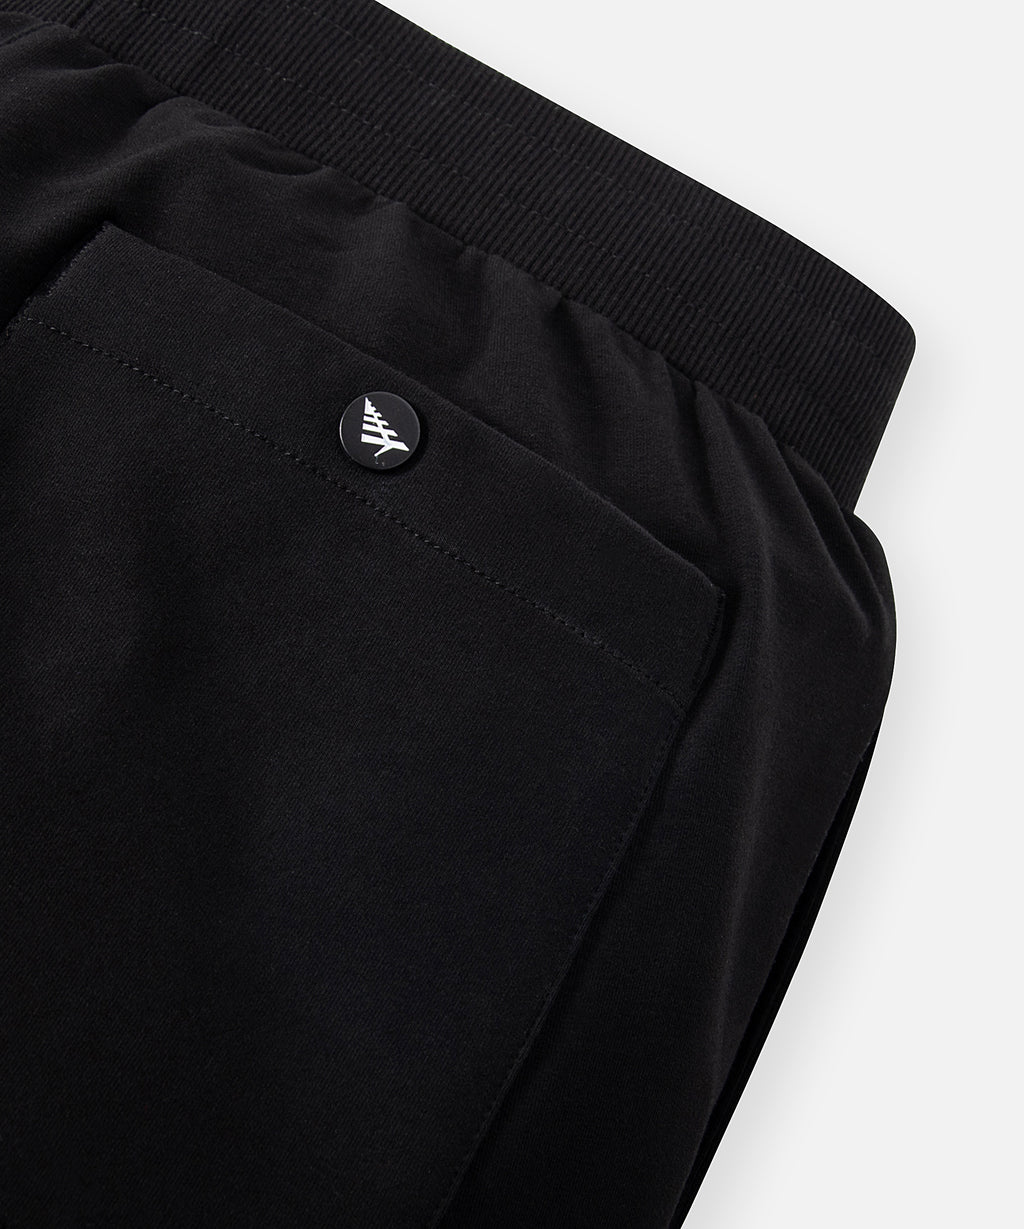  Back patch pocket with snap closure on Paper Planes Slim Fit Sweatpant, color Black.